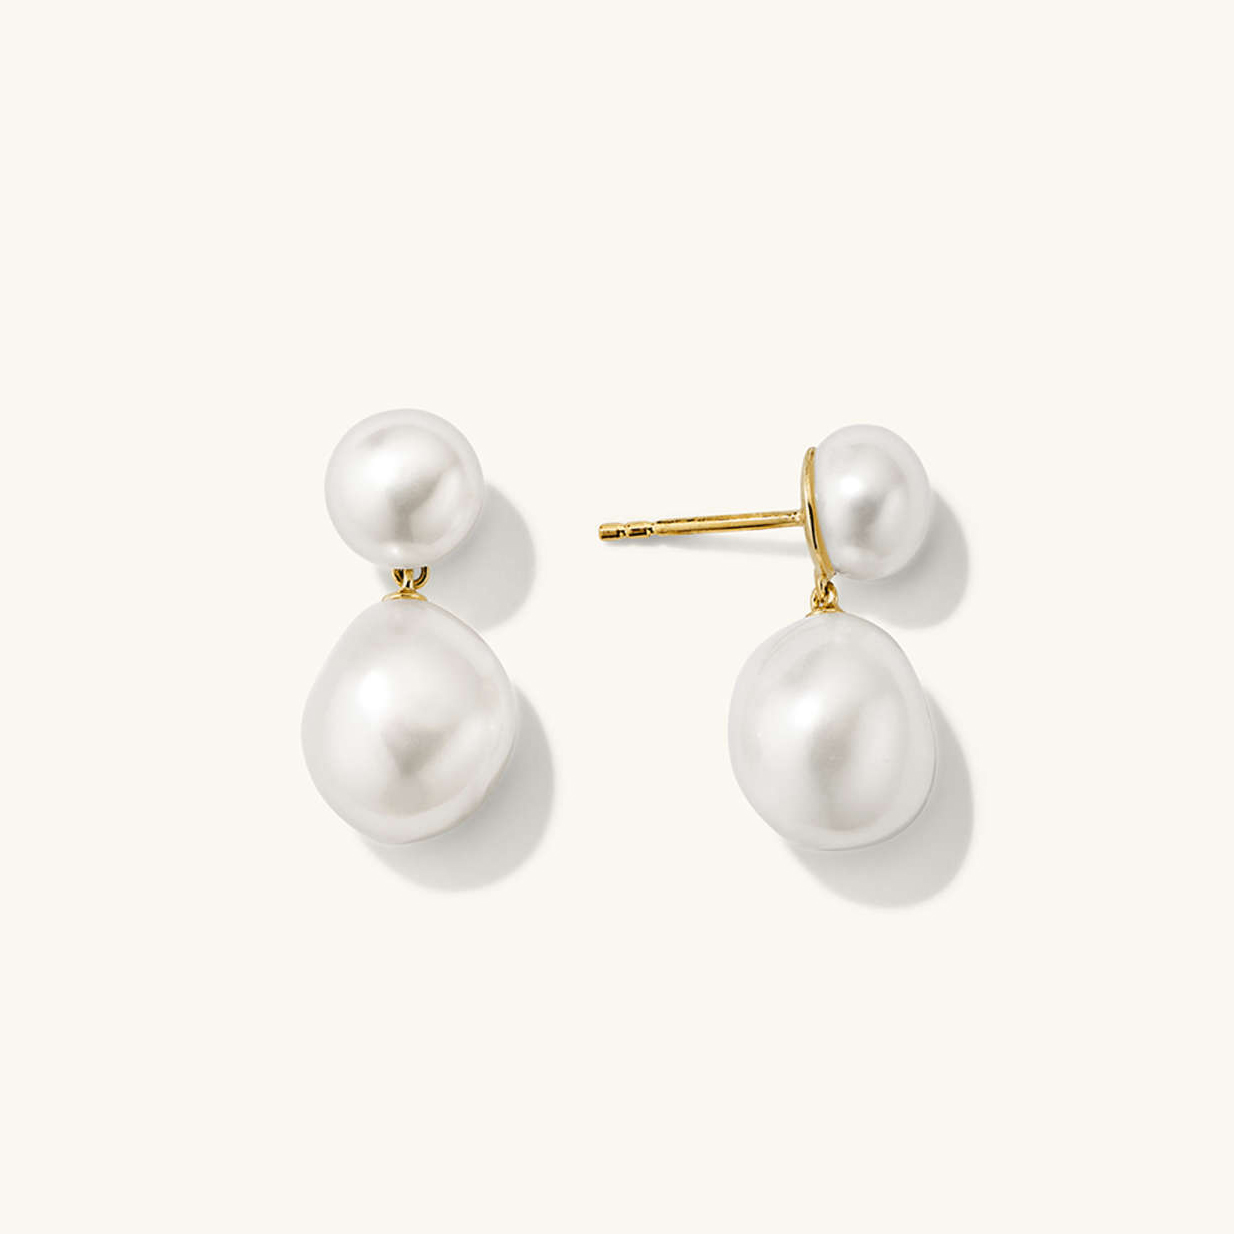 a pair of Mejuri white pearl drop earrings